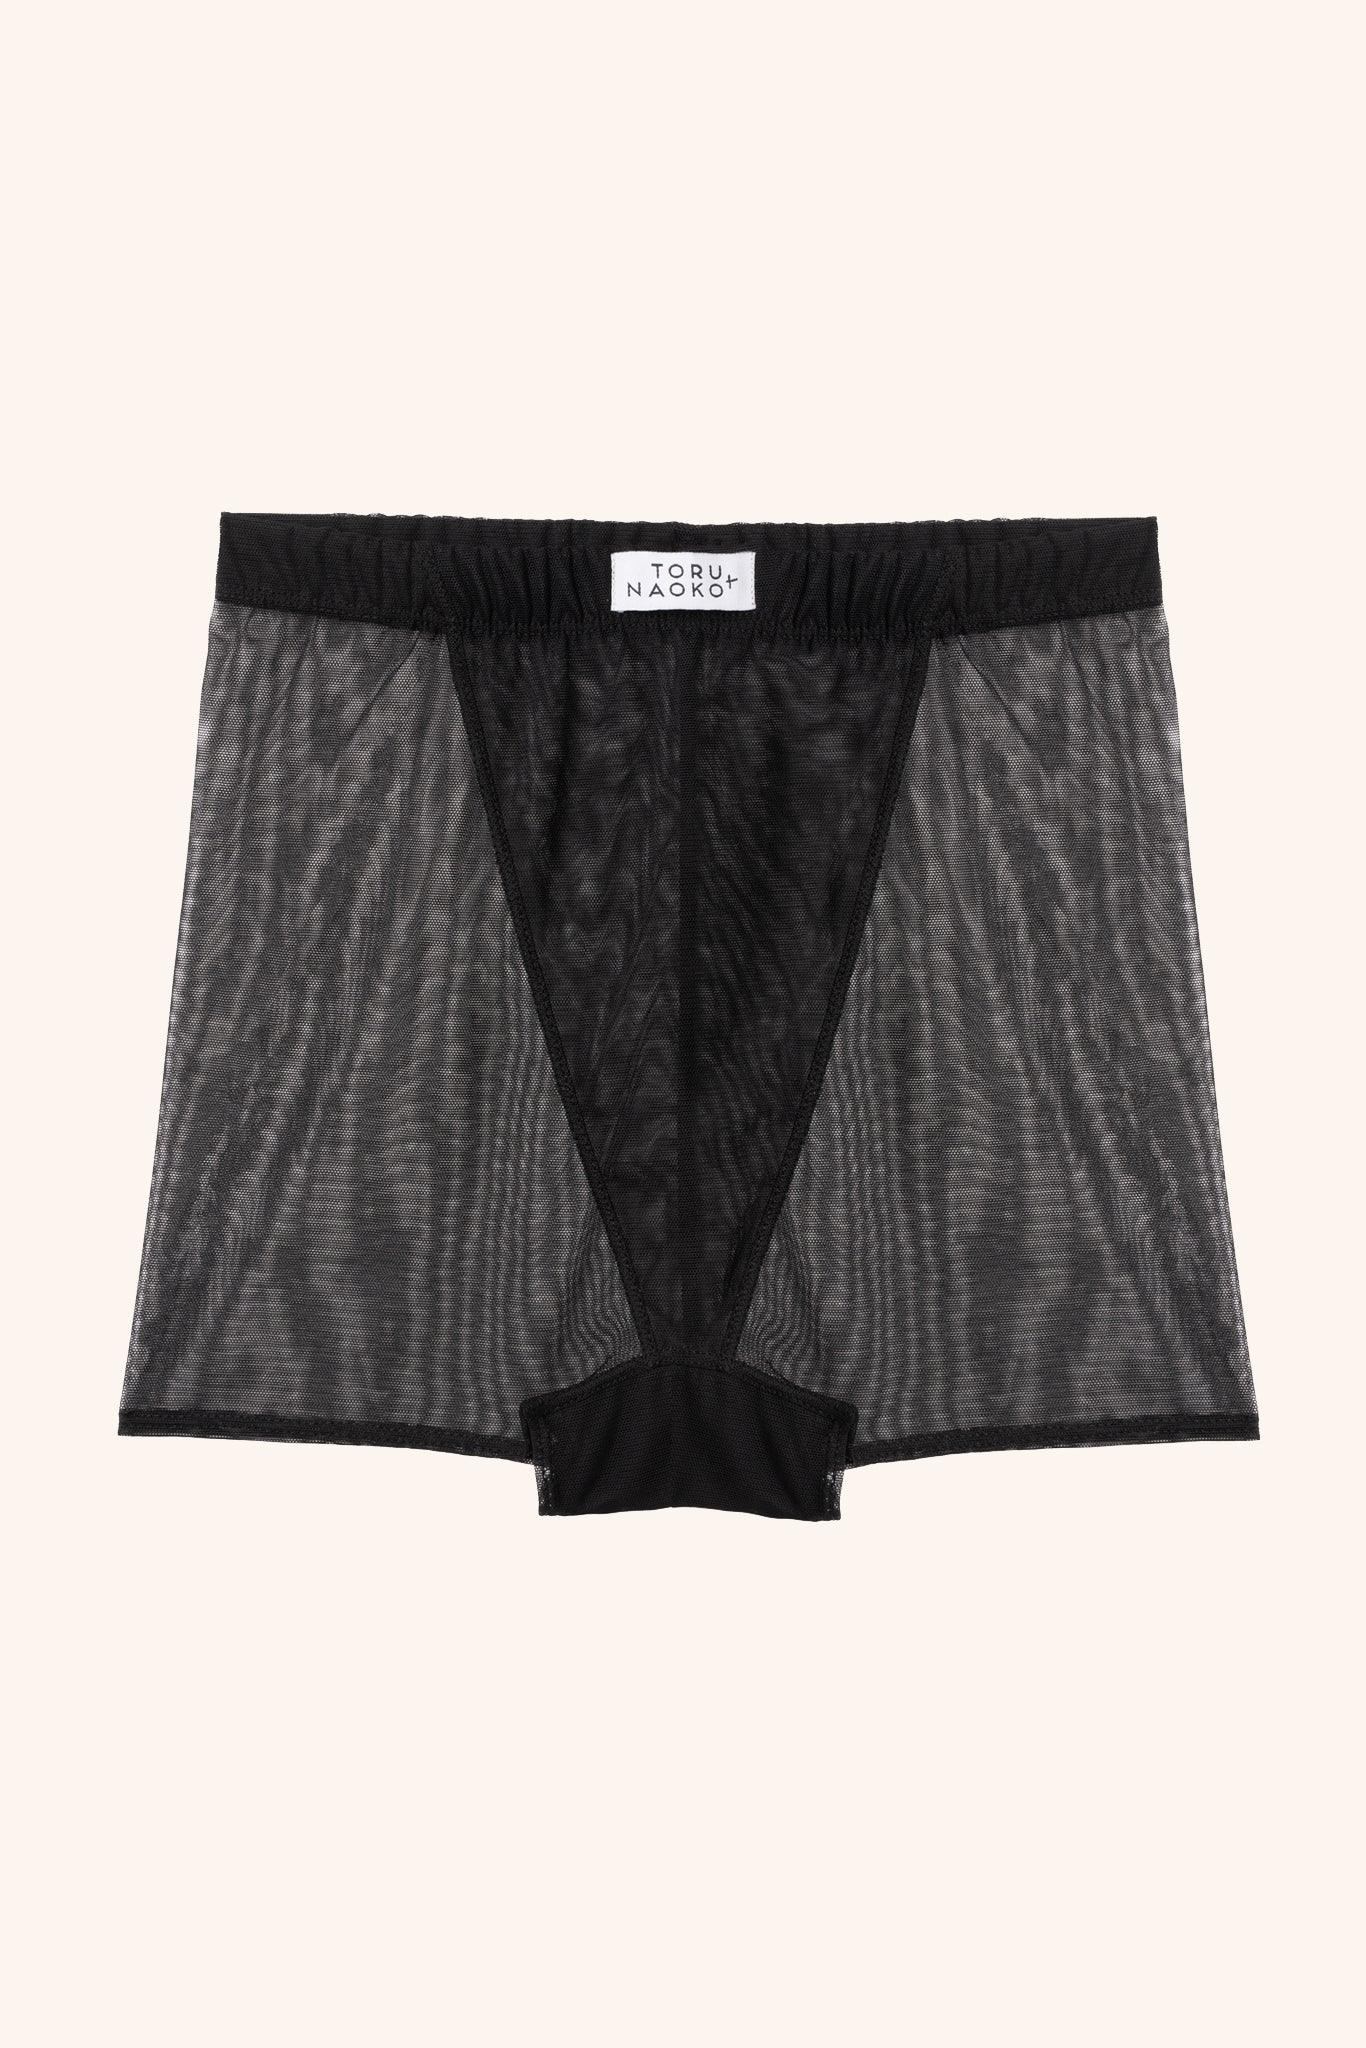 Toru &amp; Naoko lingerie - Nico boxer shorts - mesh